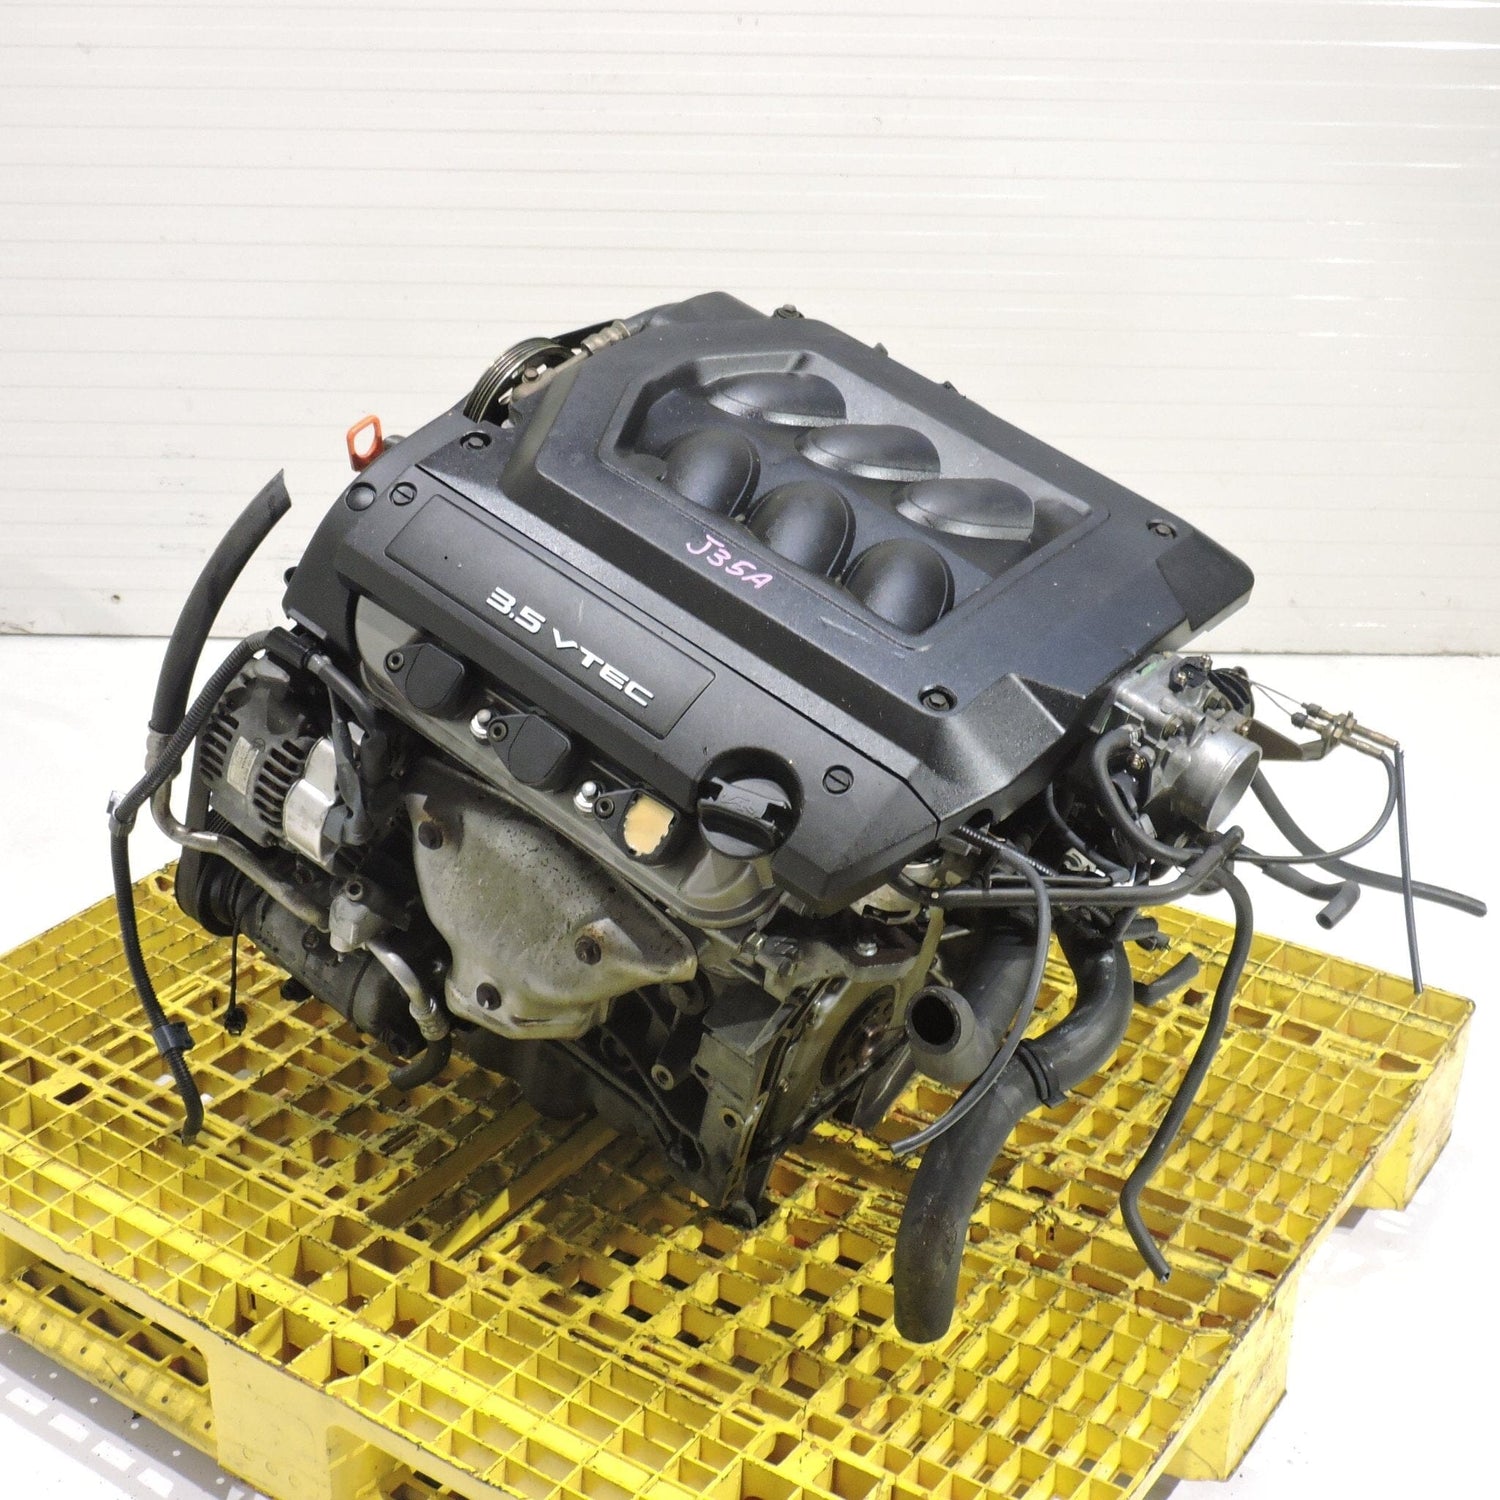 Honda Odyssey 1999-2001 3.5L V6 JDM Engine - J35a